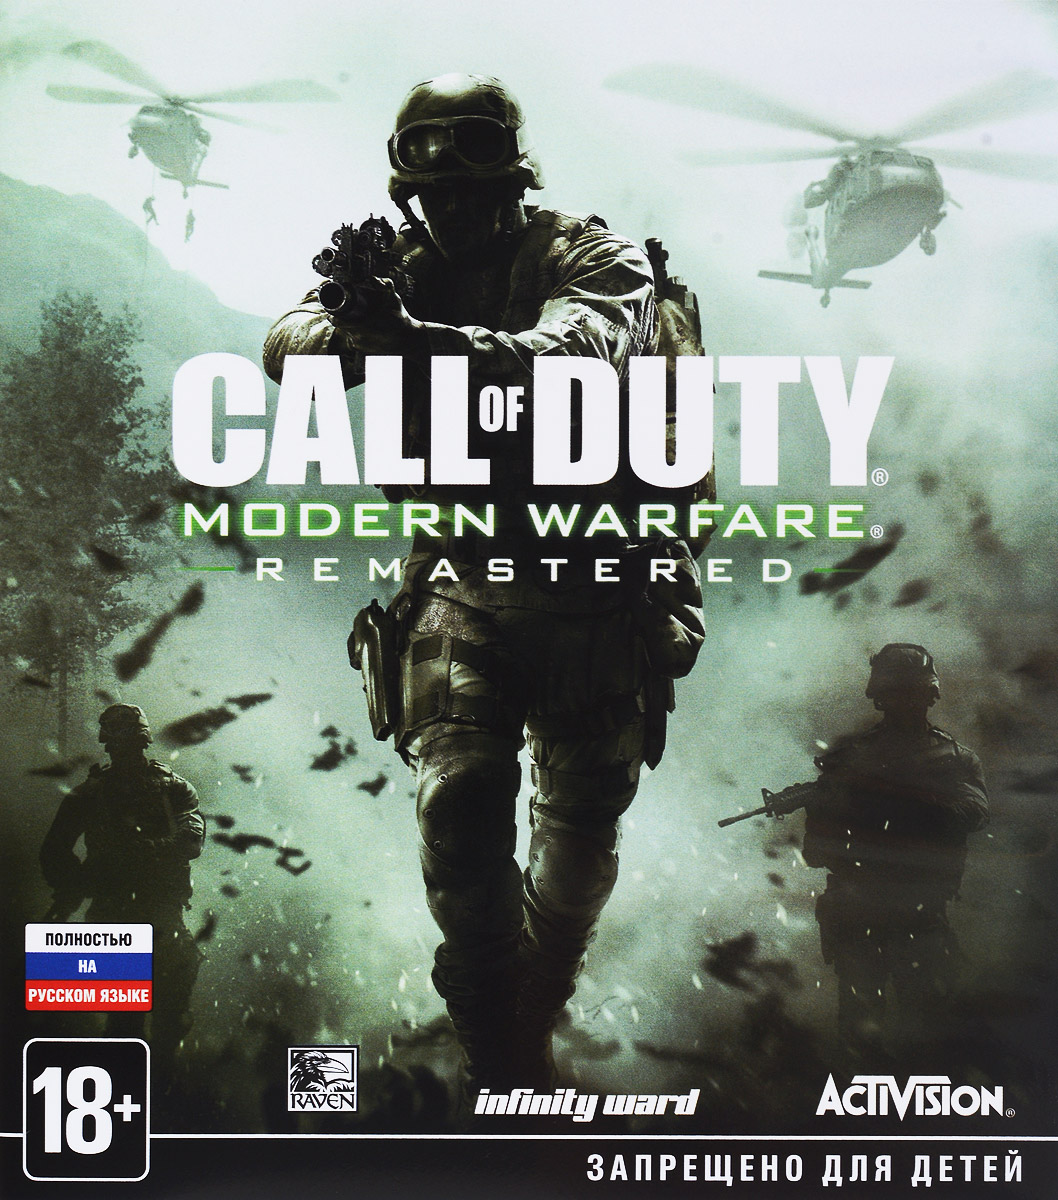 Call of duty modern warfare ps4 купить. Call of Duty 4 Modern Warfare ps4. Call of Duty MW 2 Remastered ps4. Cod Remastered ps4. Call of Duty Modern Warfare 2 пс4.